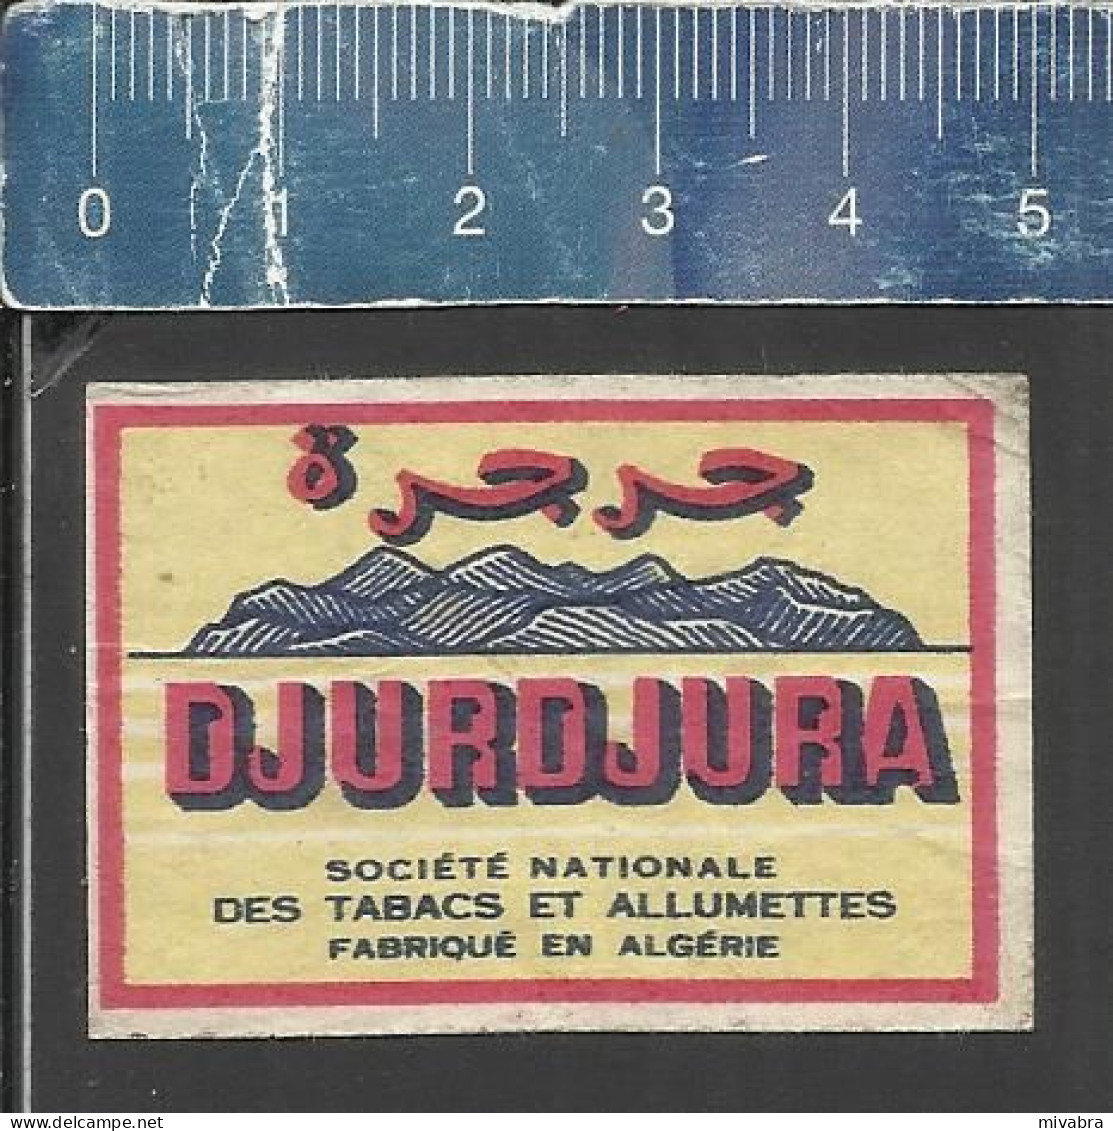 DJURDJURA ( MOUNTAIN RANGE OF THE TELL ATLAS ) - OLD MATCHBOX LABEL ALGERIA - Matchbox Labels